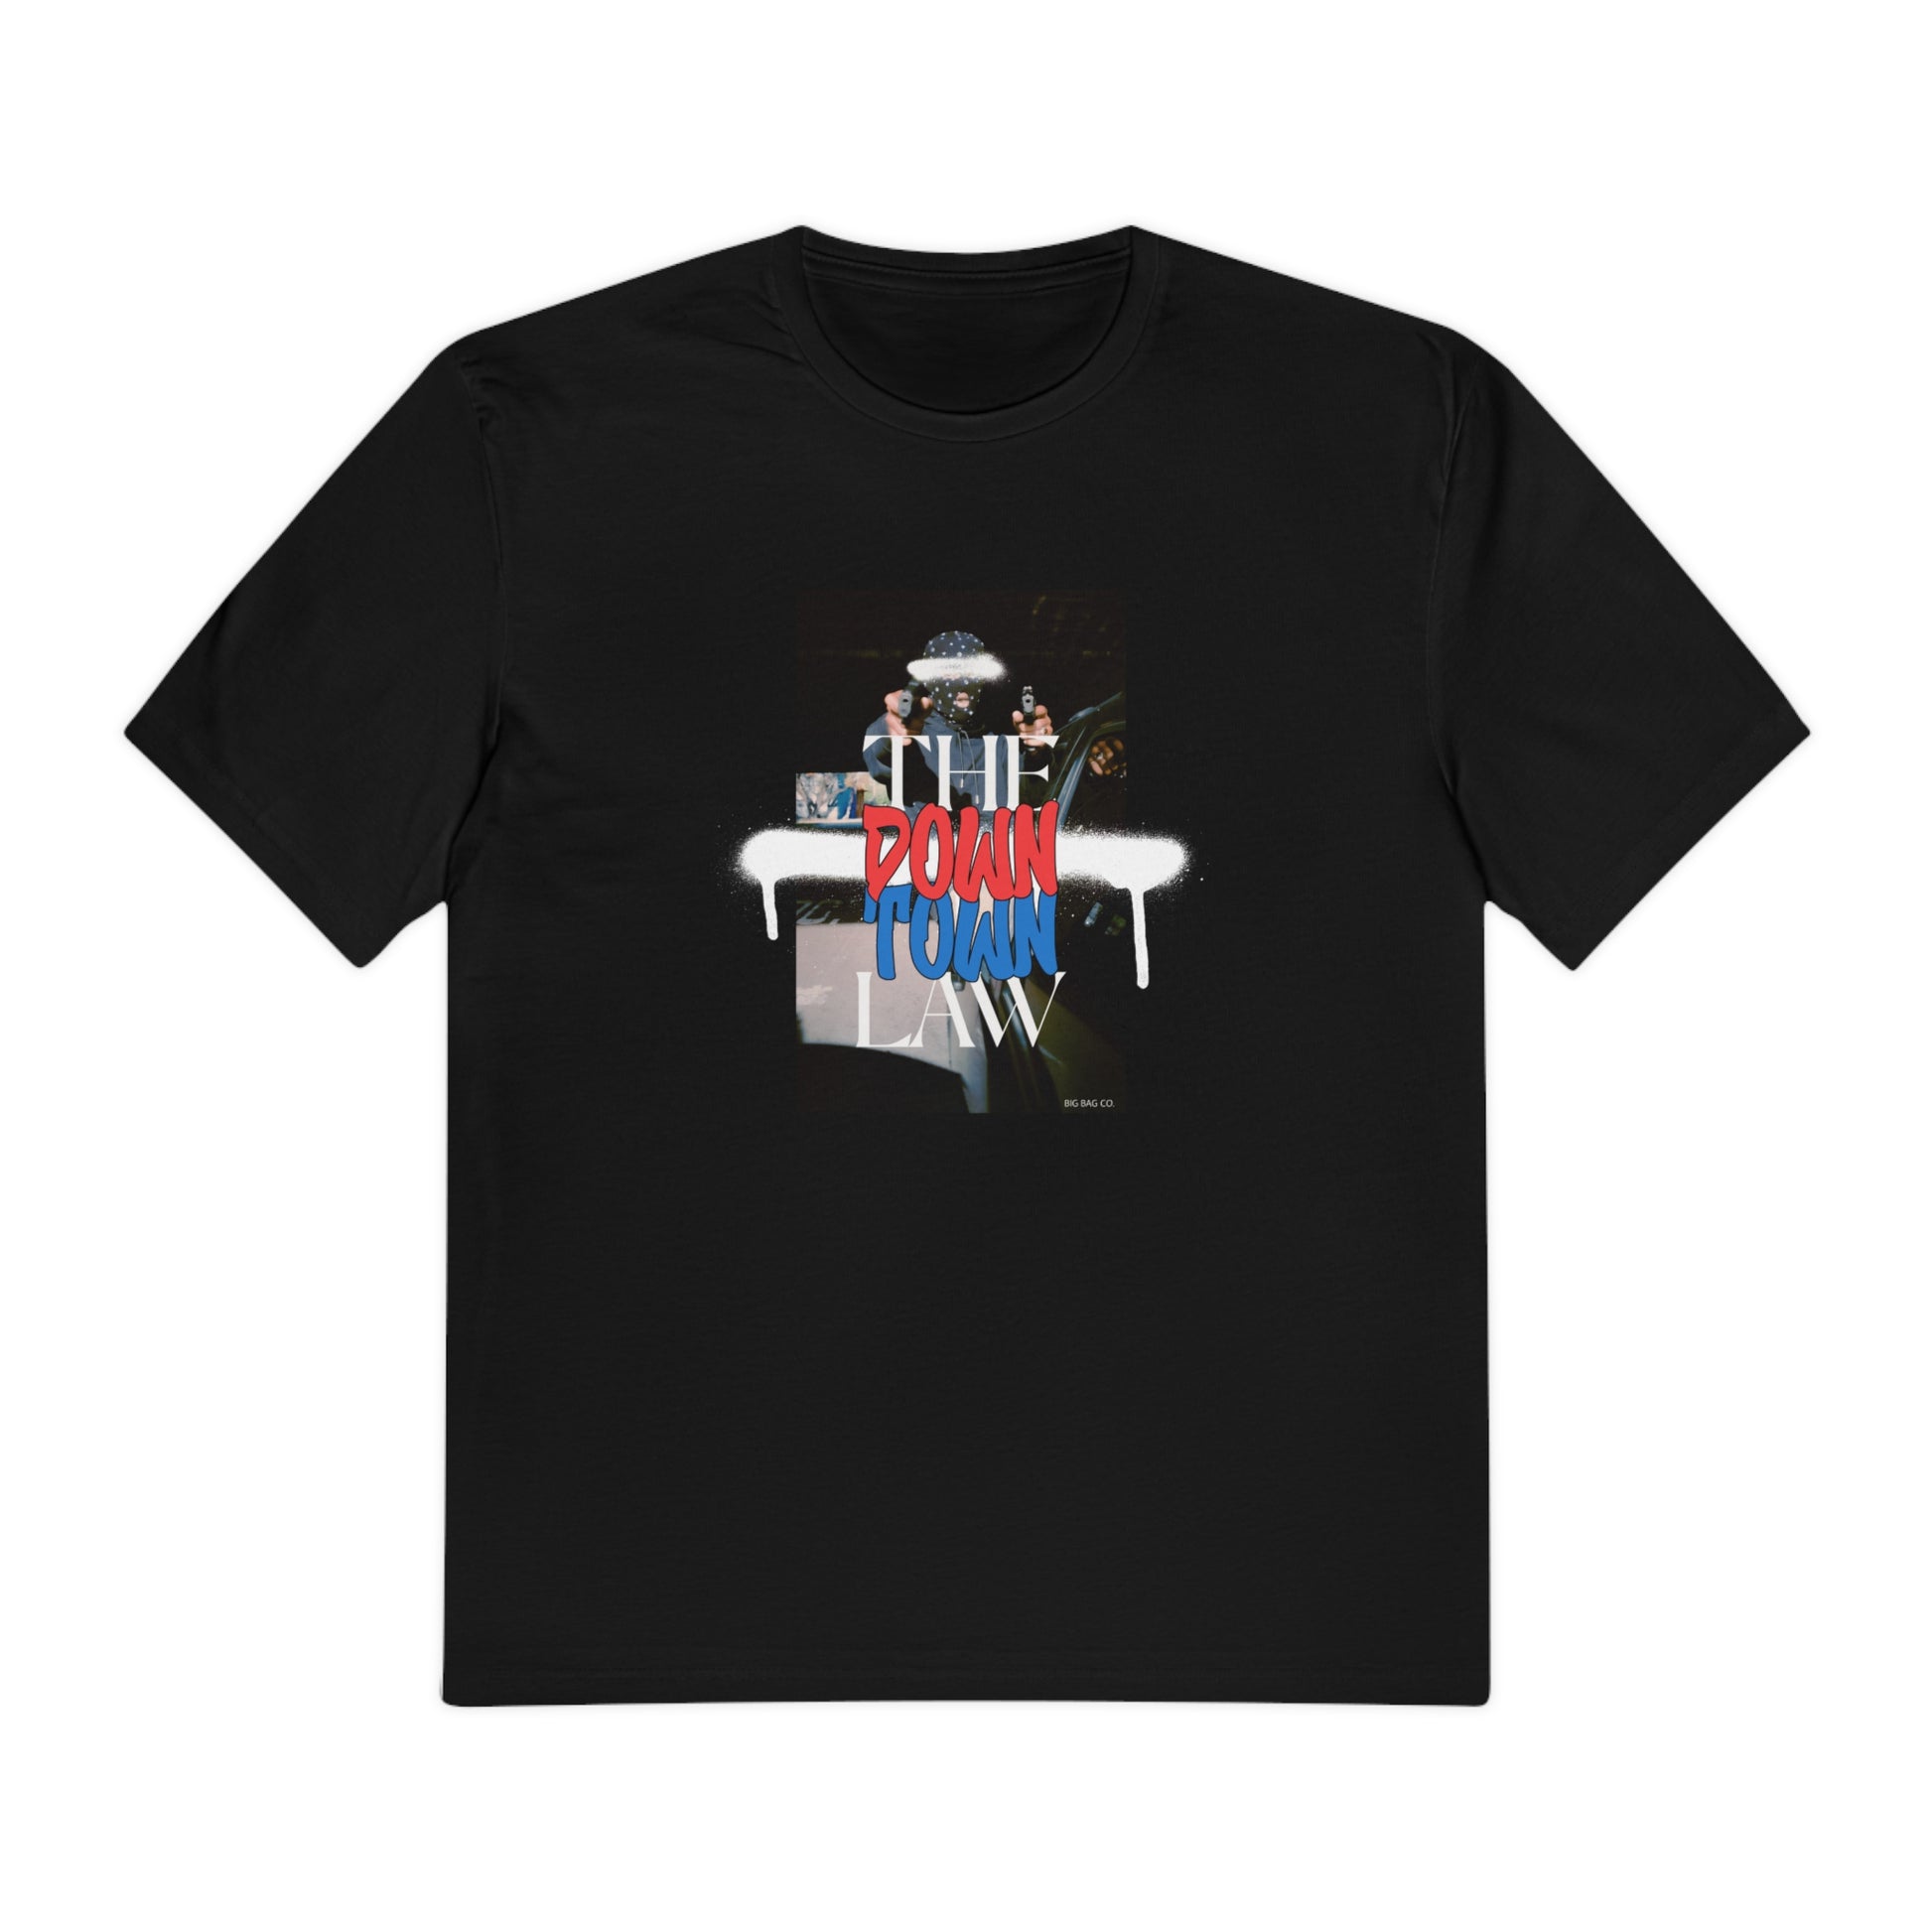 The down town law shirt | Urban style shirt | Streetwear shirt | Illustrate shirt | Unisex shirt | Modern style shirt -  L2KBoutique